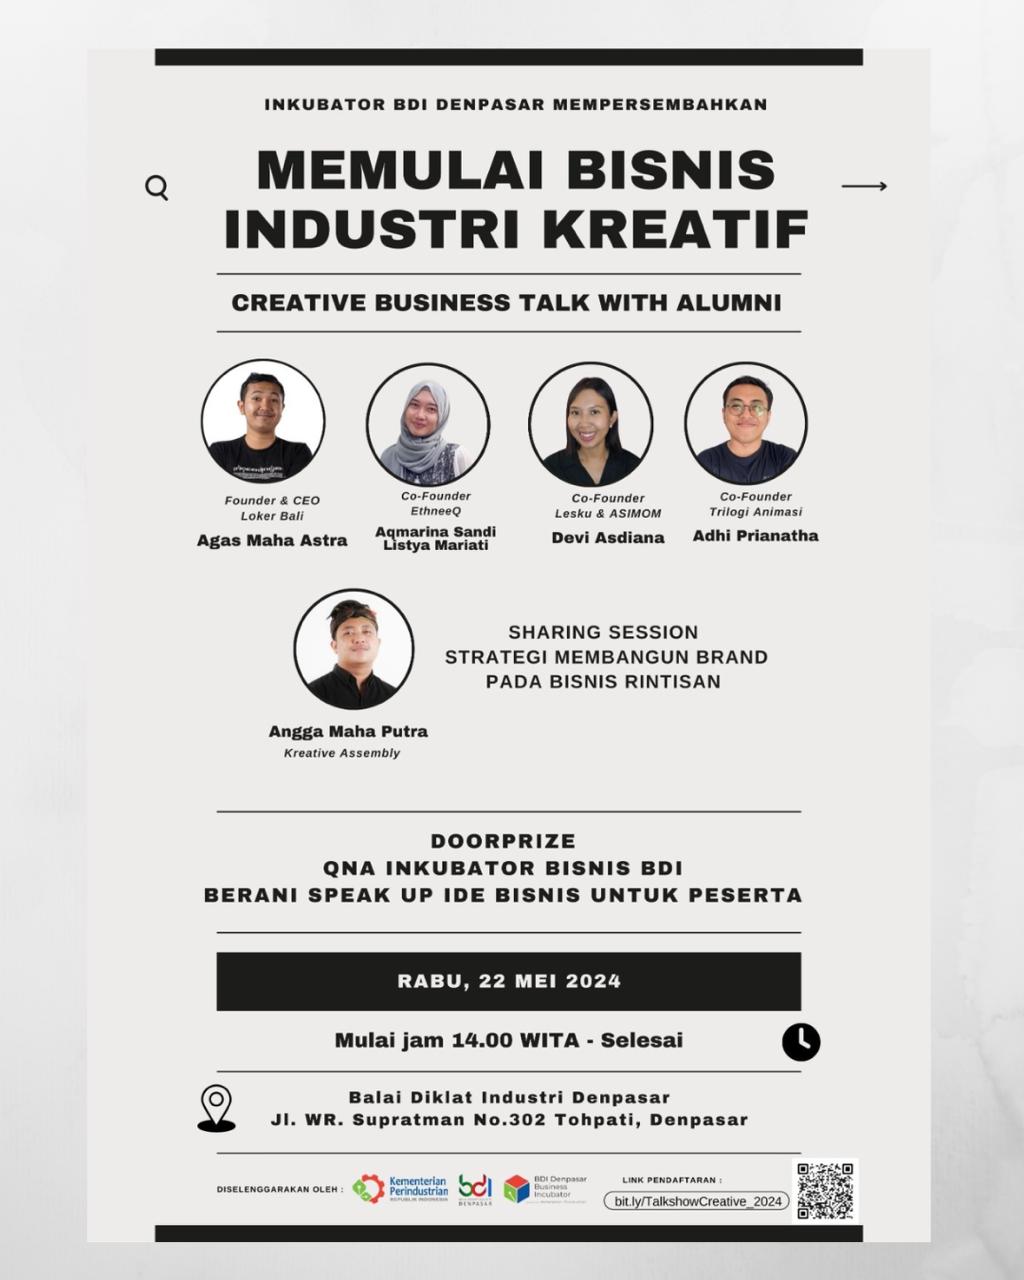 Creative Business Talk With Alumni INBIS BDI Denpasar